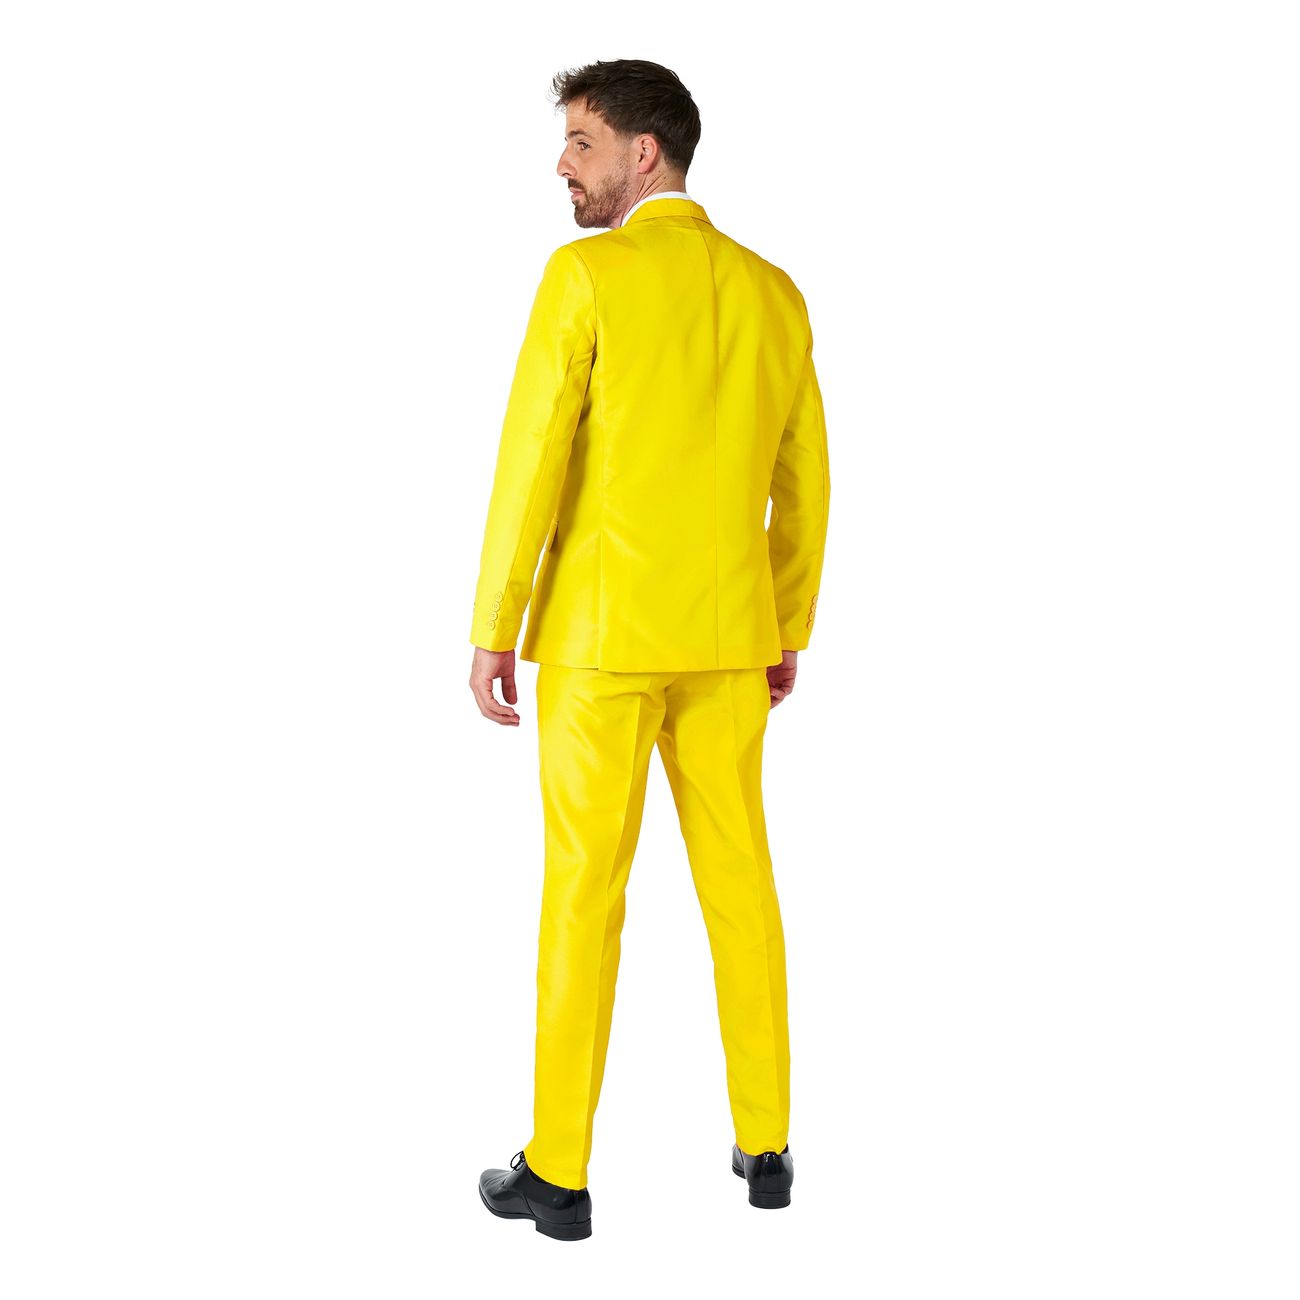 suitmeister-gul-kostym-47460-6